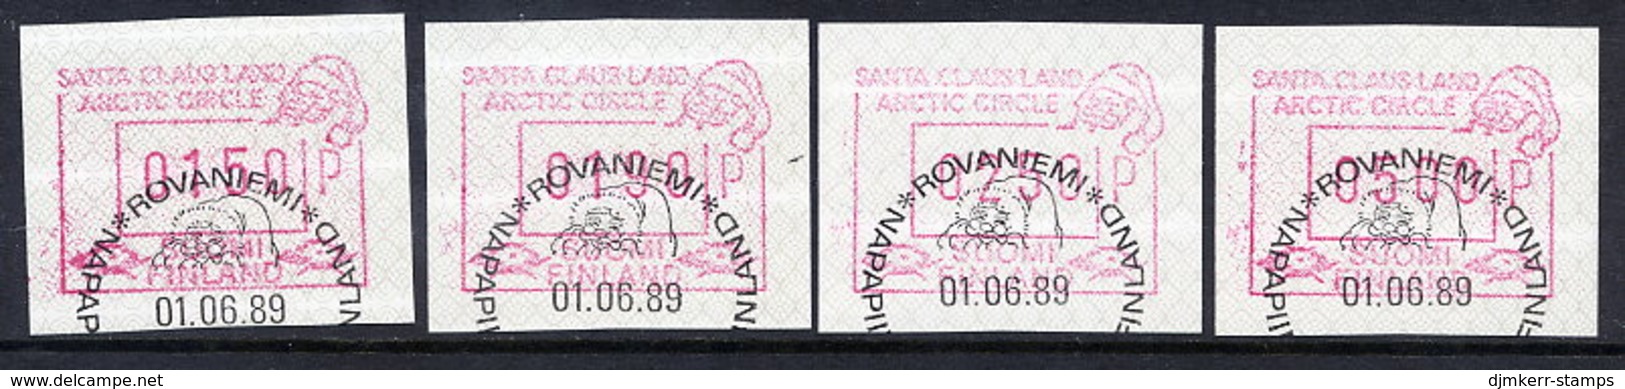 FINLAND 1989 Santa Claus Land , 4 Different Values Used .Michel 6 - Vignette [ATM]